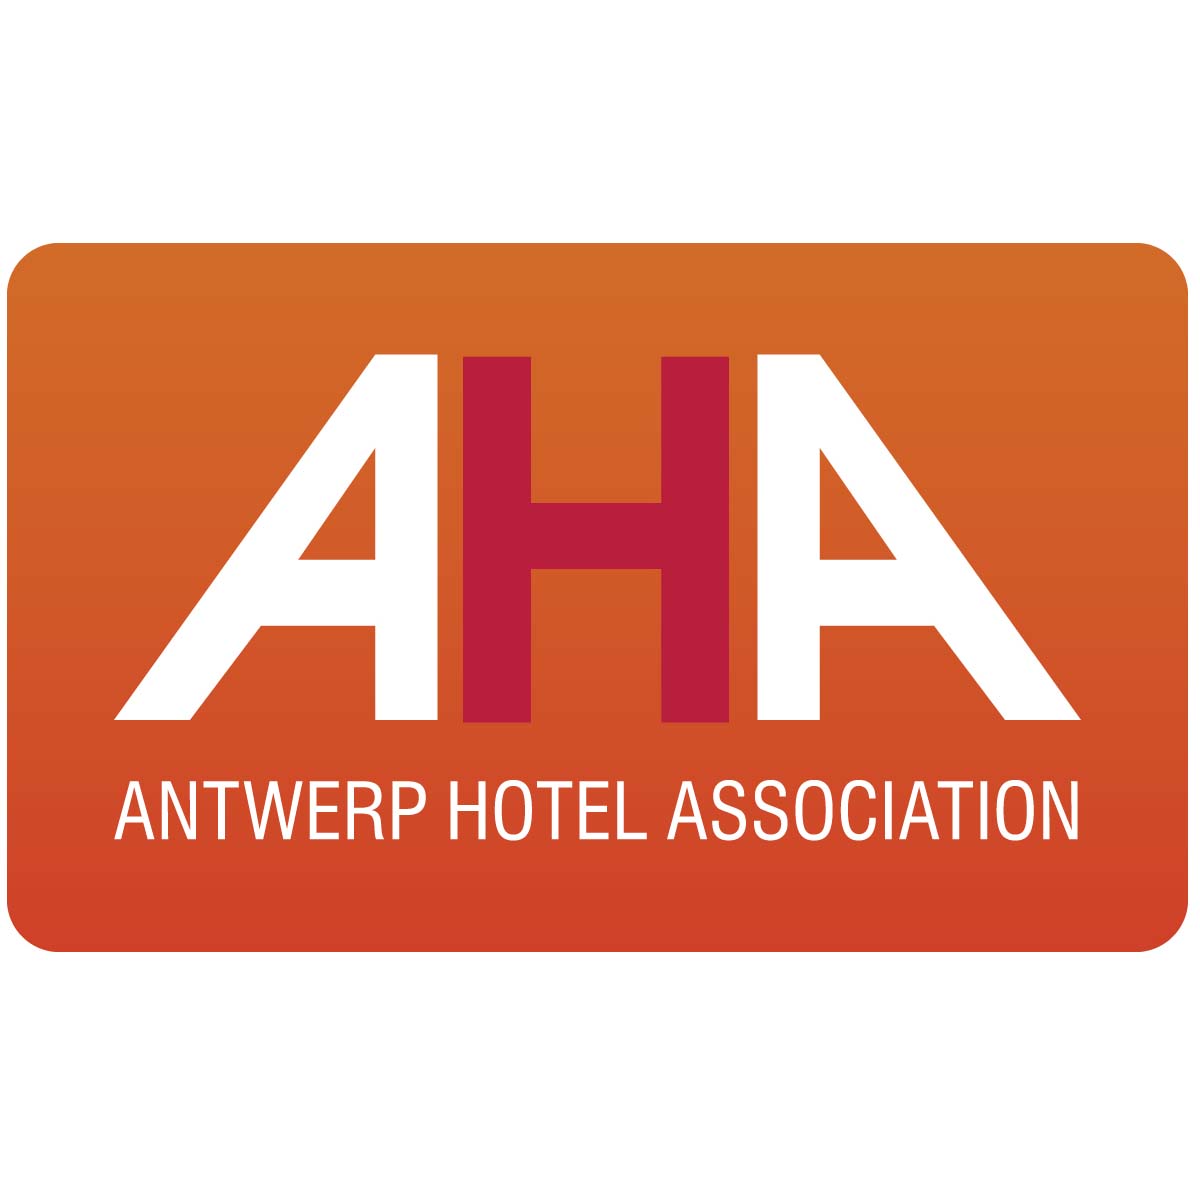 Antwerp Hotel Association logo square